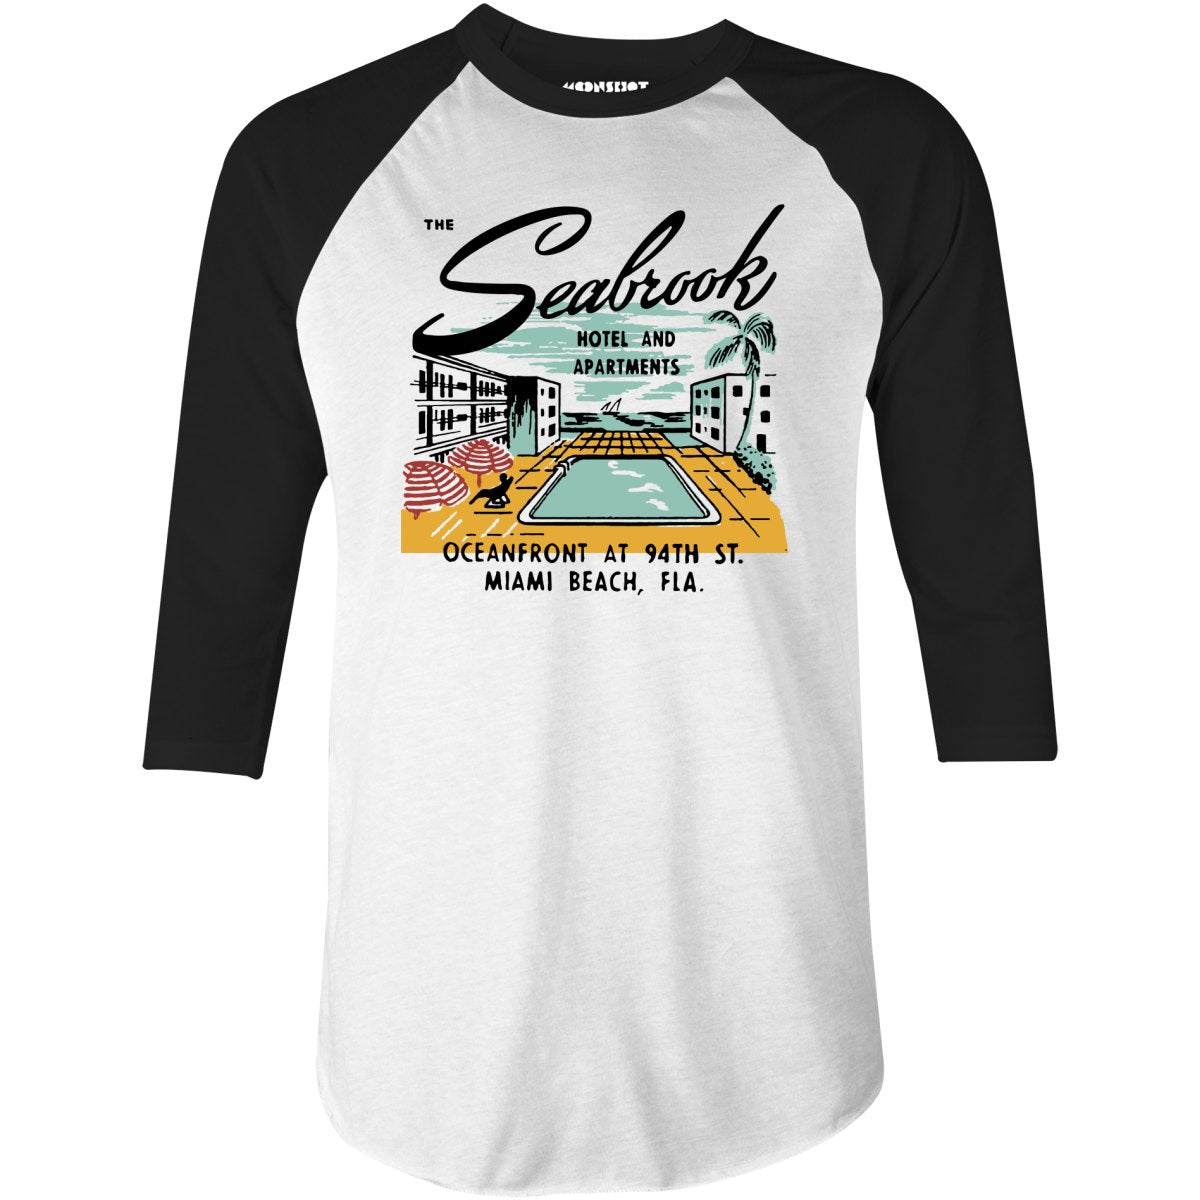 The Seabrook - Miami, FL - Vintage Hotel - 3/4 Sleeve Raglan T-Shirt